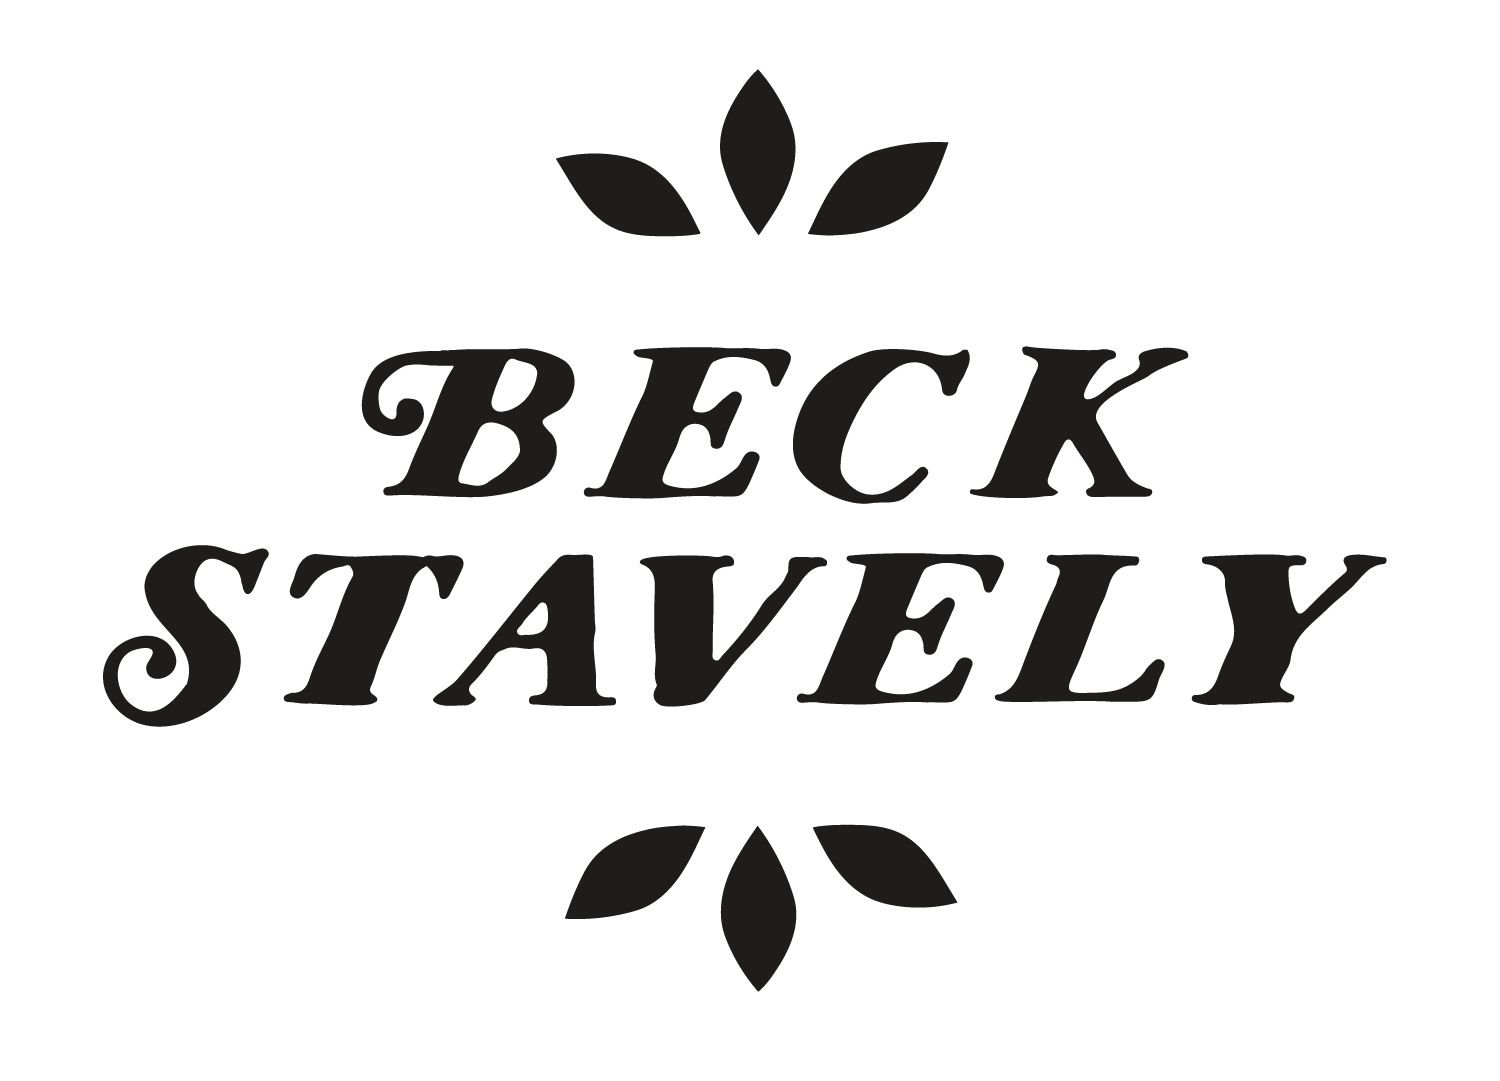 Beck Stavely